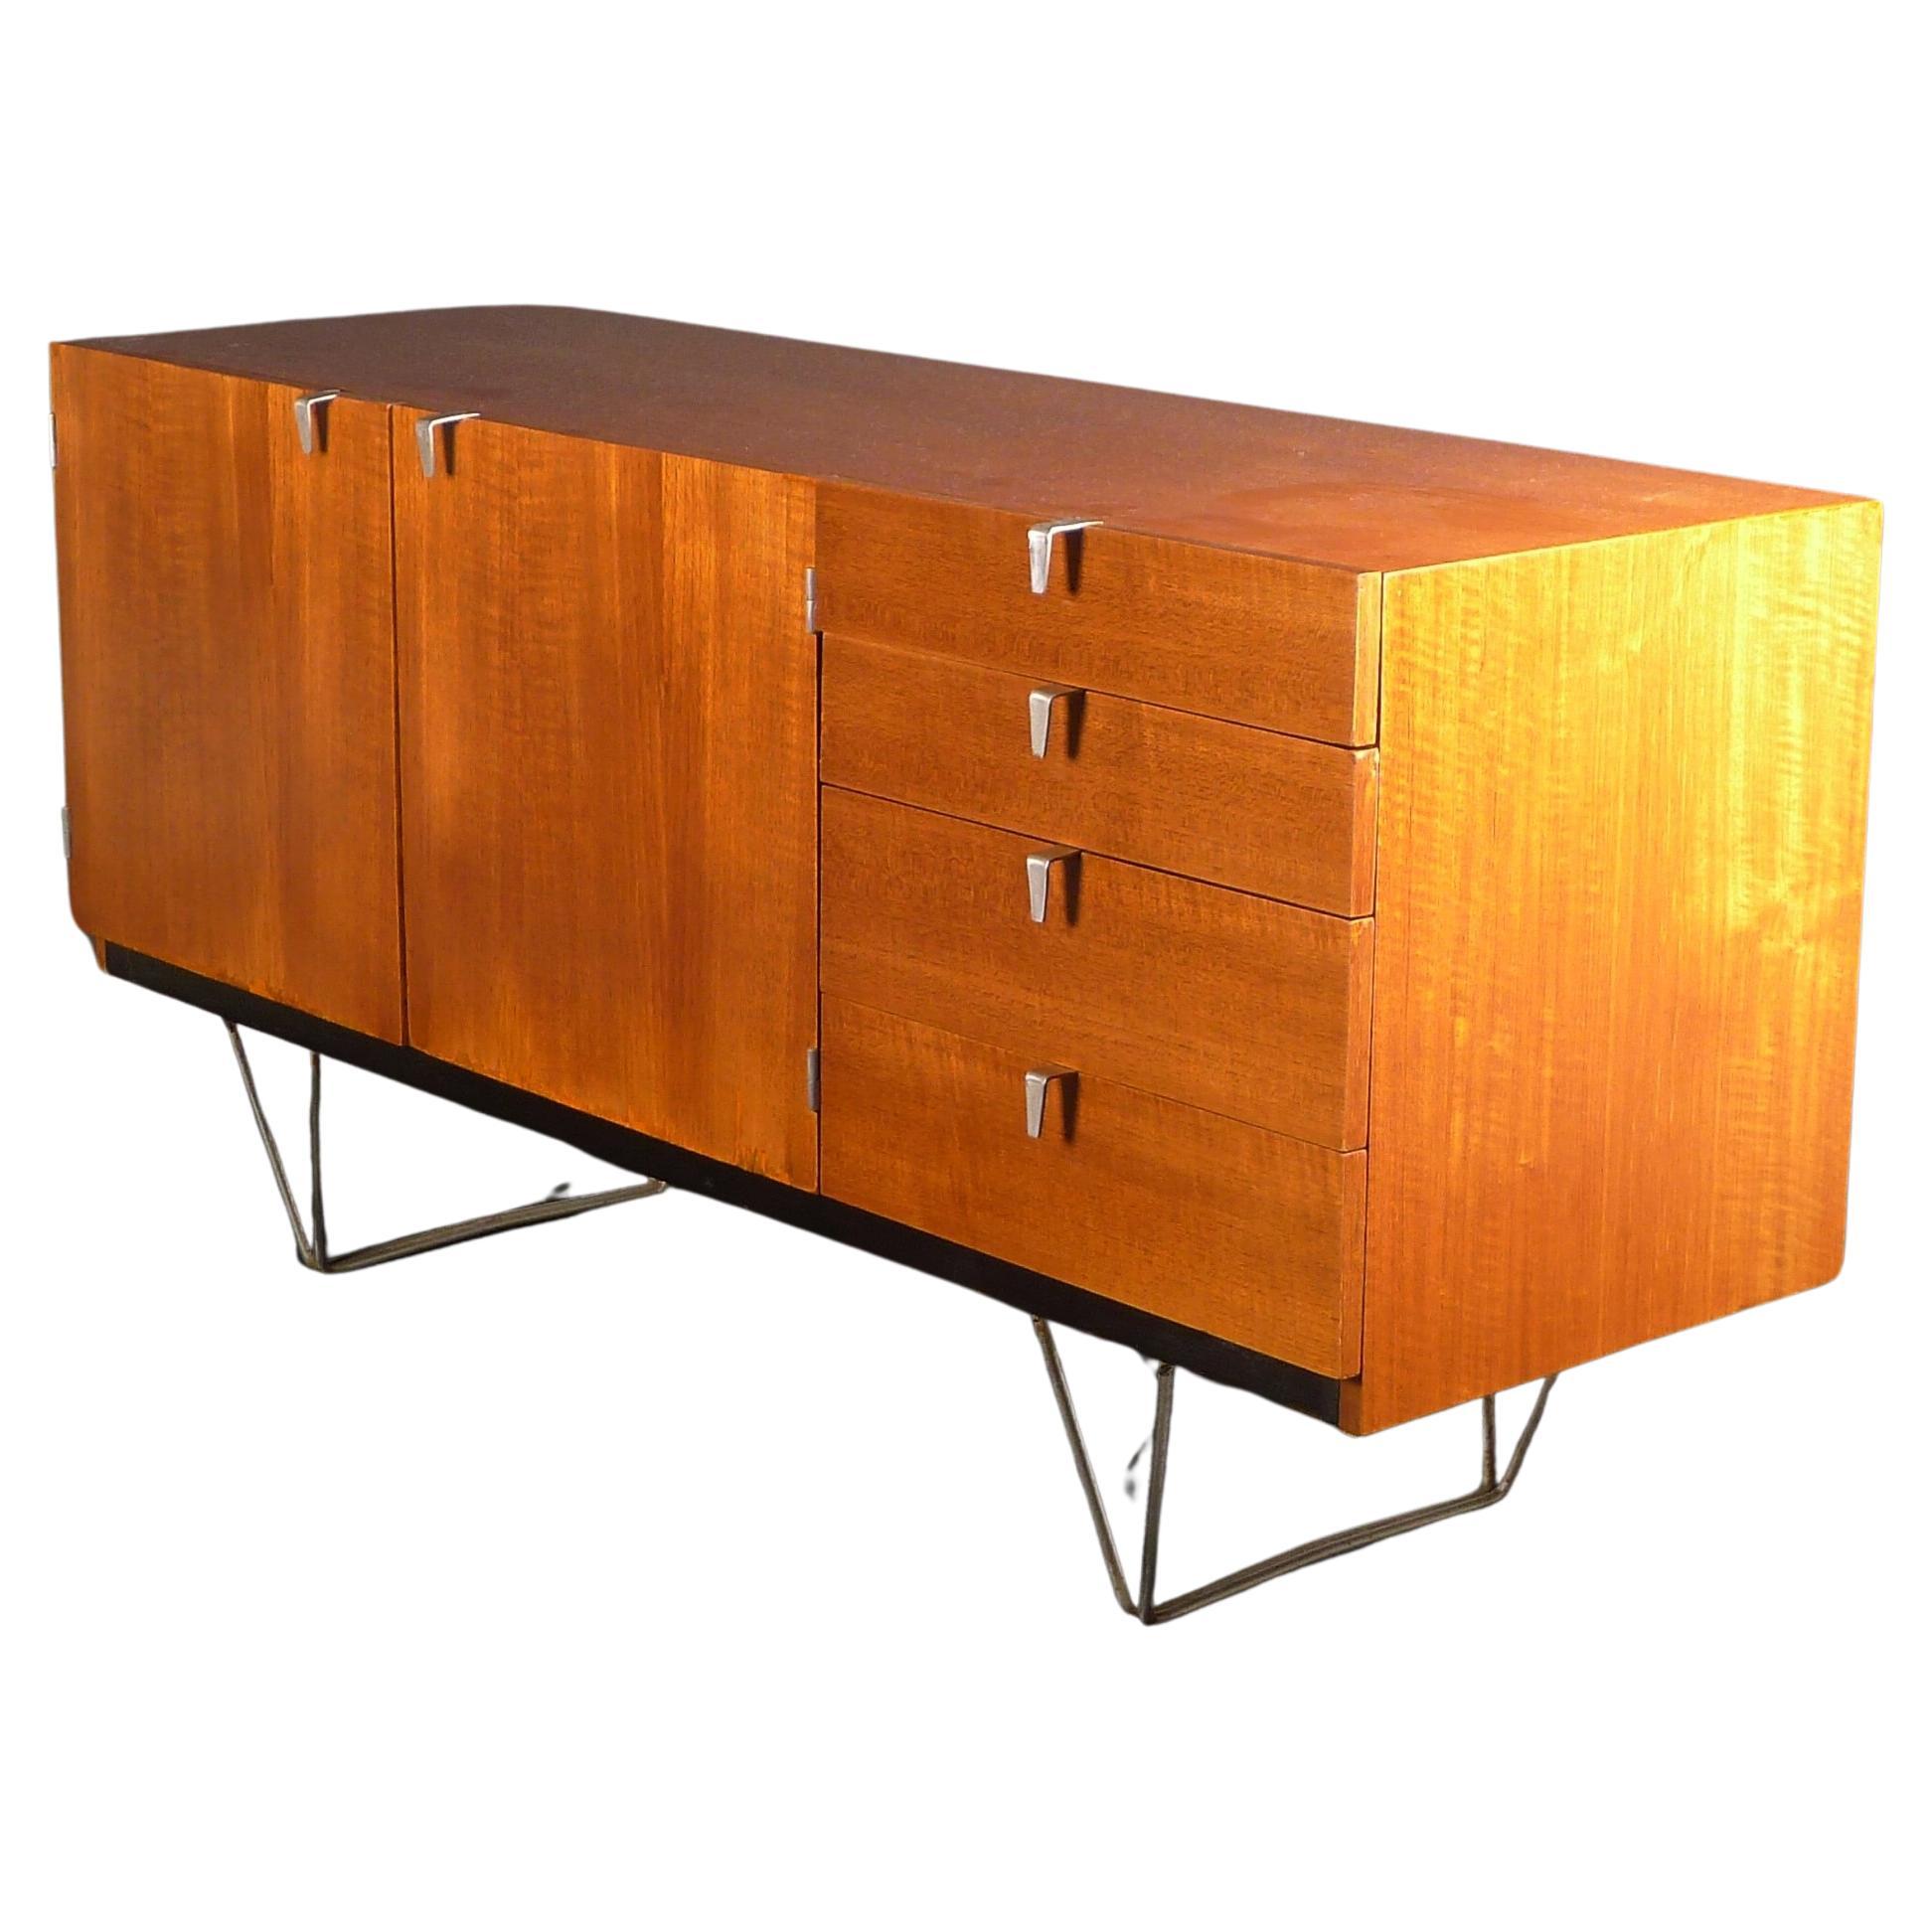 John & Sylvia Reid, Model S201 Teak Sideboard, for Stag Furniture, 1960s For Sale